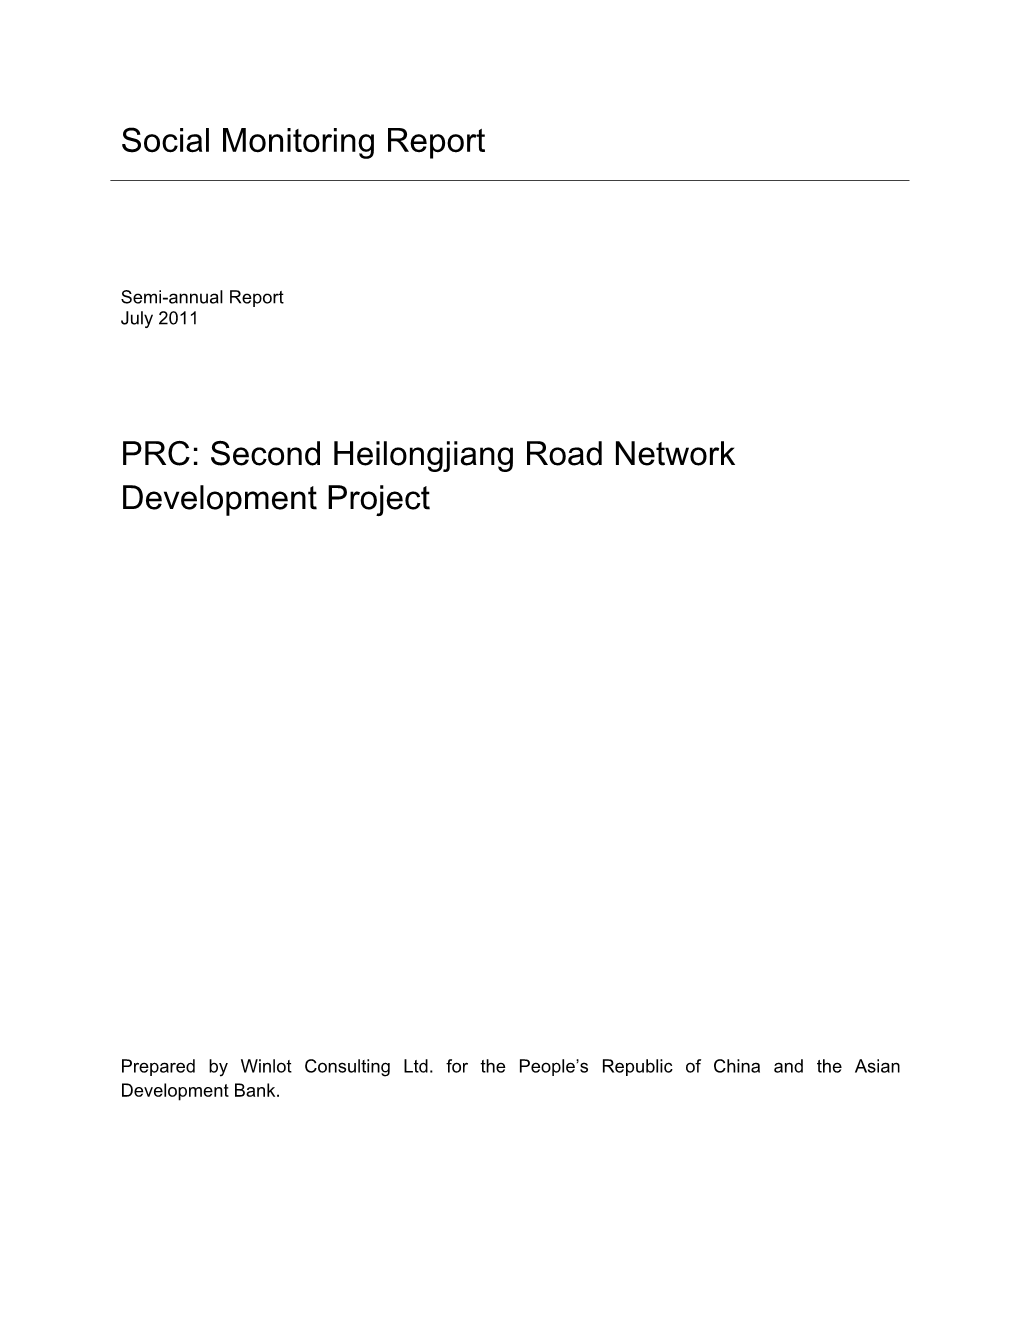 PRC: Second Heilongjiang Road Network Development Project